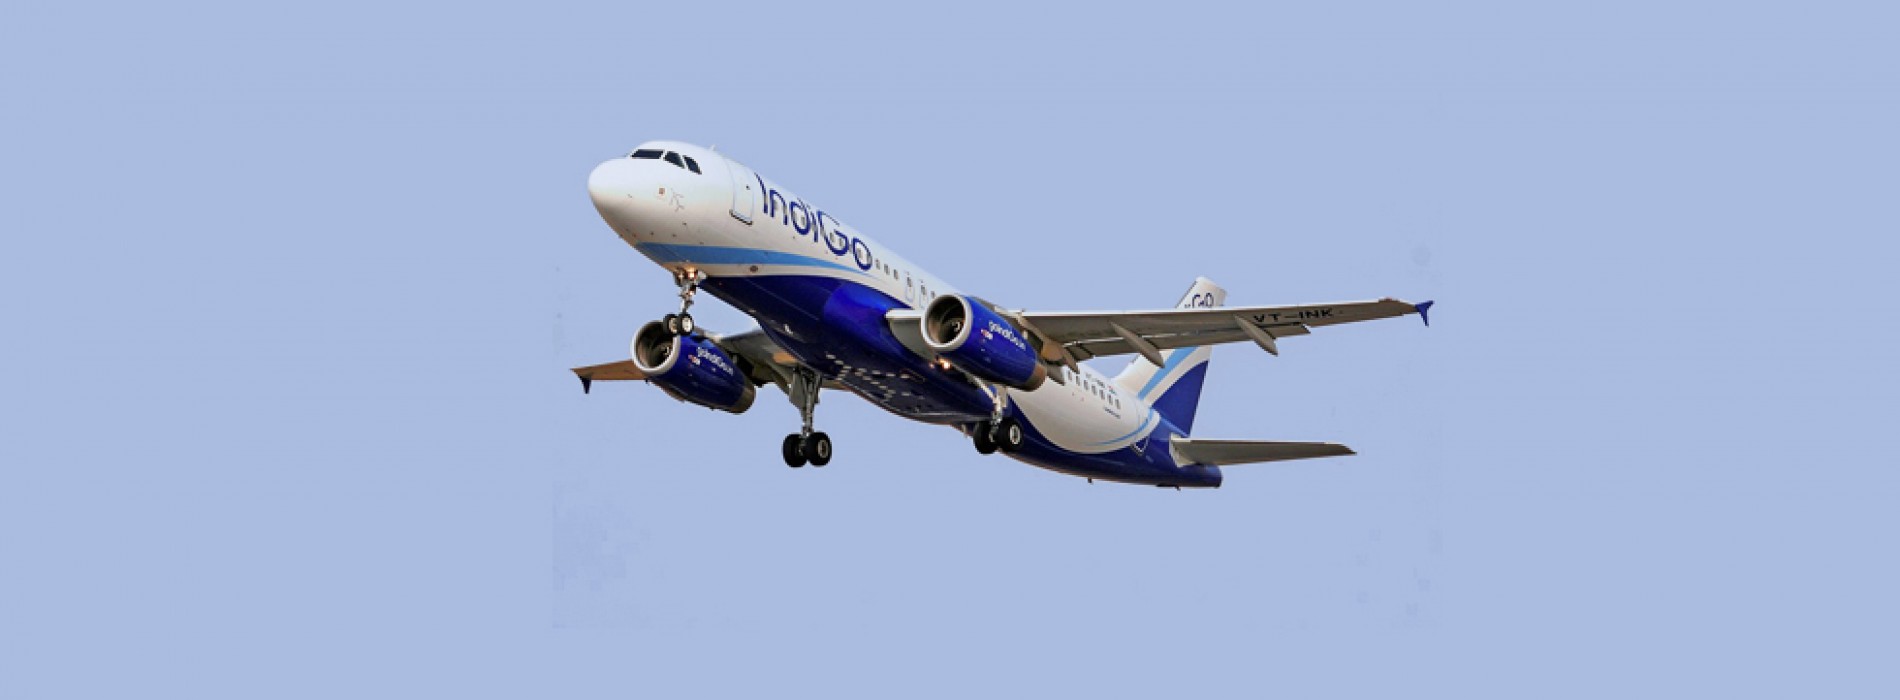 IndiGo enhances Tier II connectivity; Adds 8 additional flights on its network